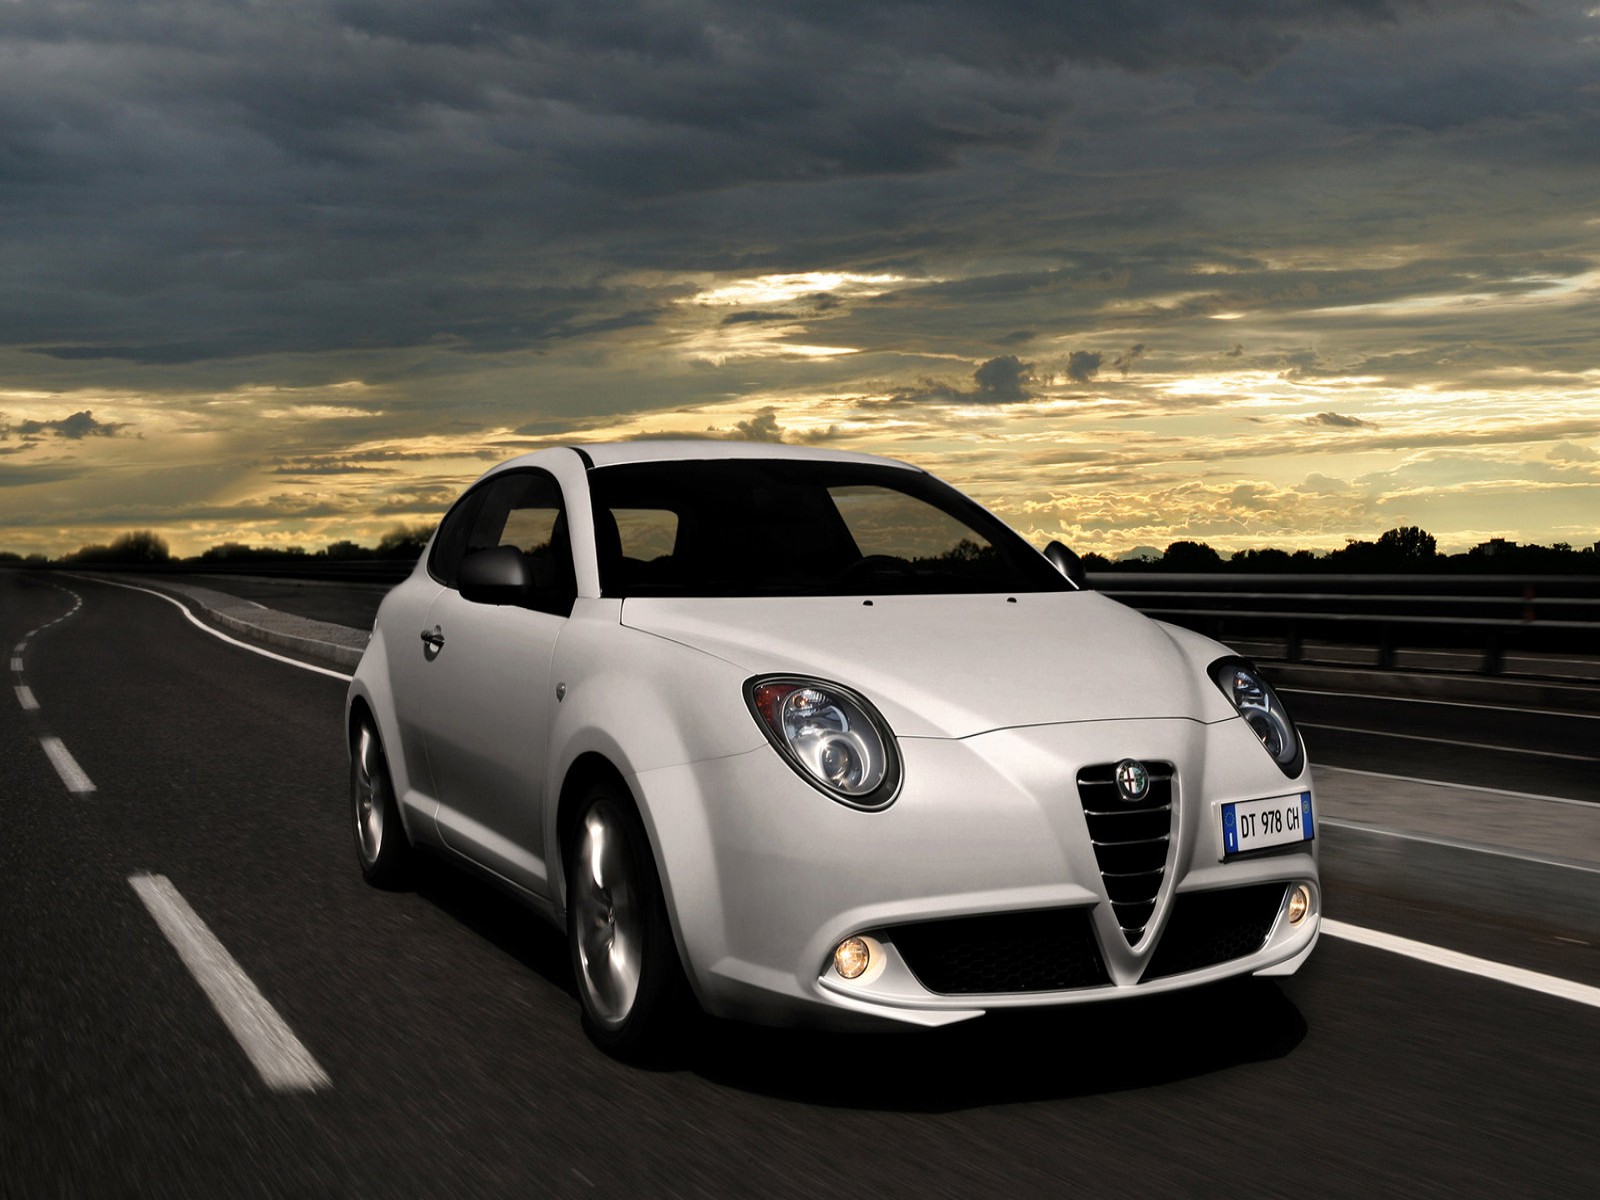 ... /s1600/2010+Alfa+Romeo+MiTo+1.4+MultiAir+-+Car+Photo+Wallpaper.jpg